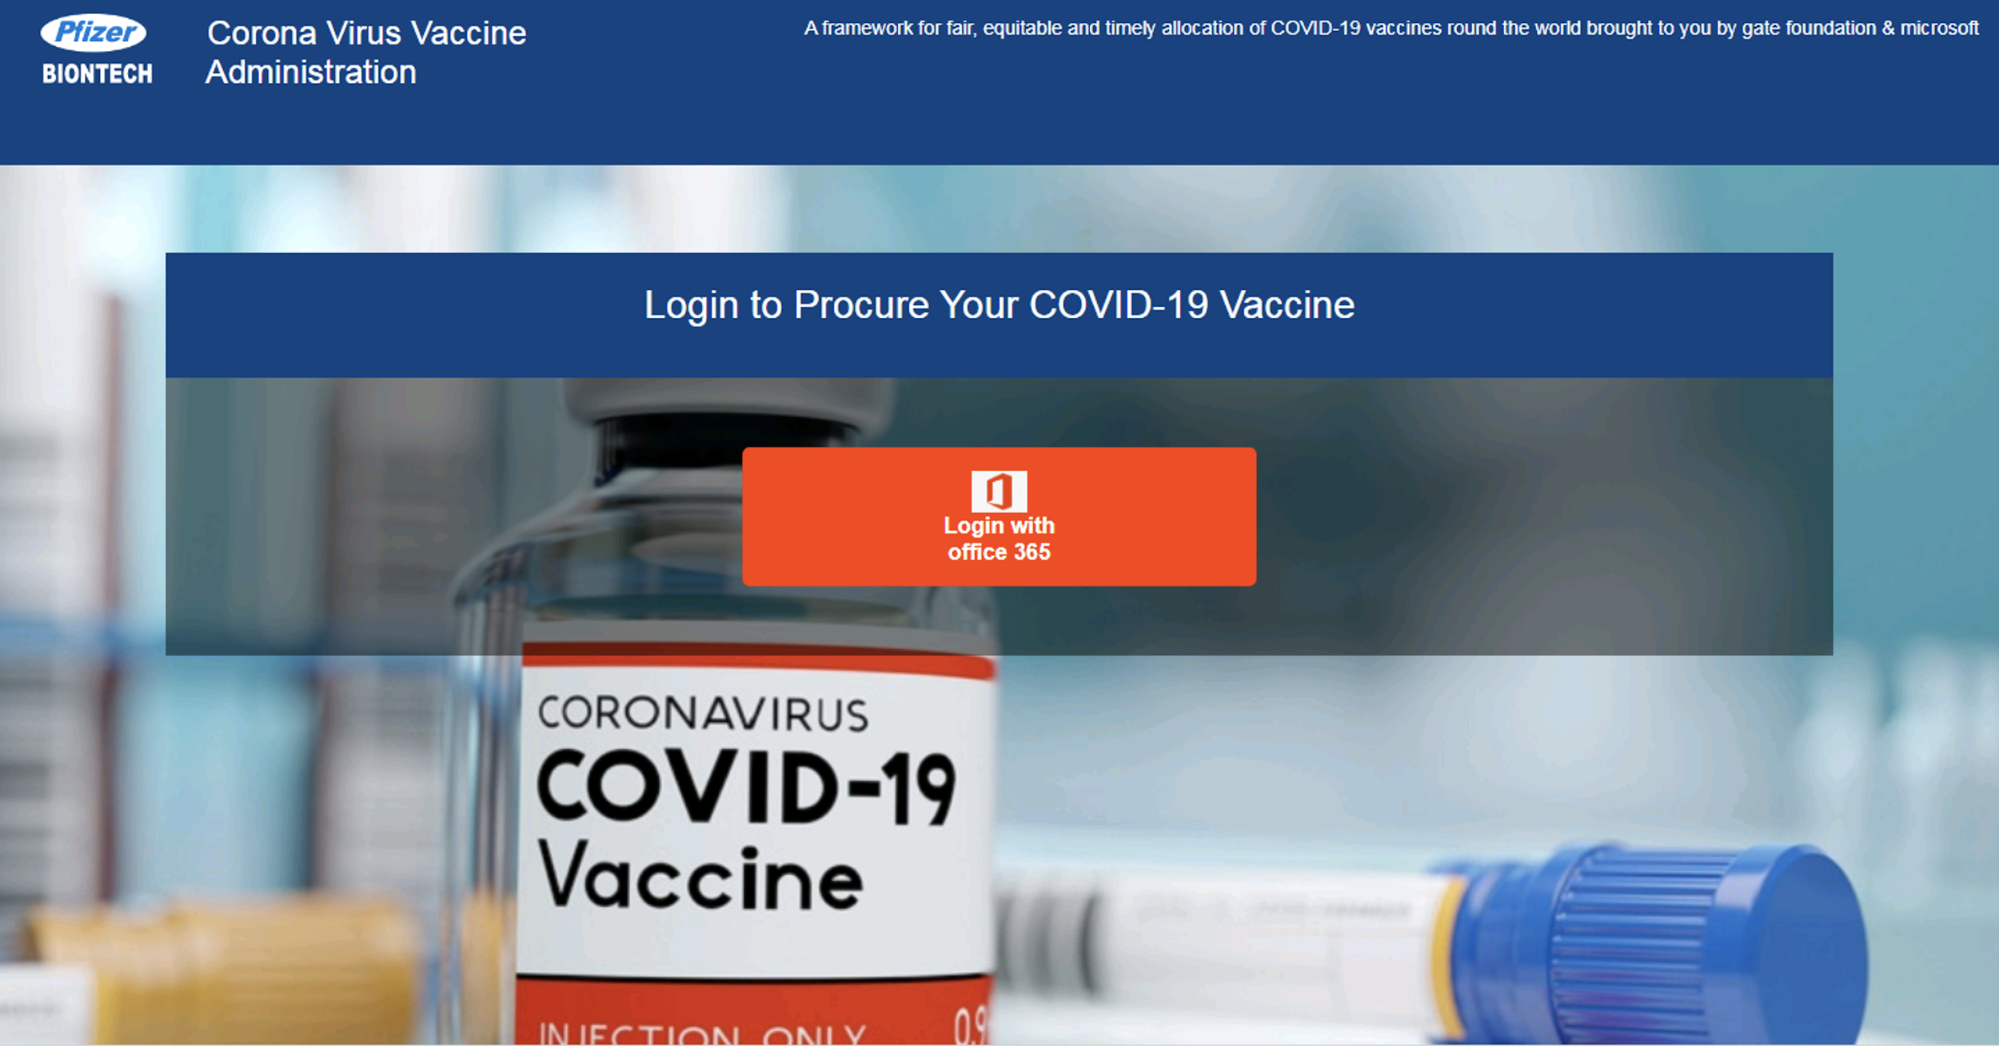 Phishing attacks targeting COVID-19 vaccines